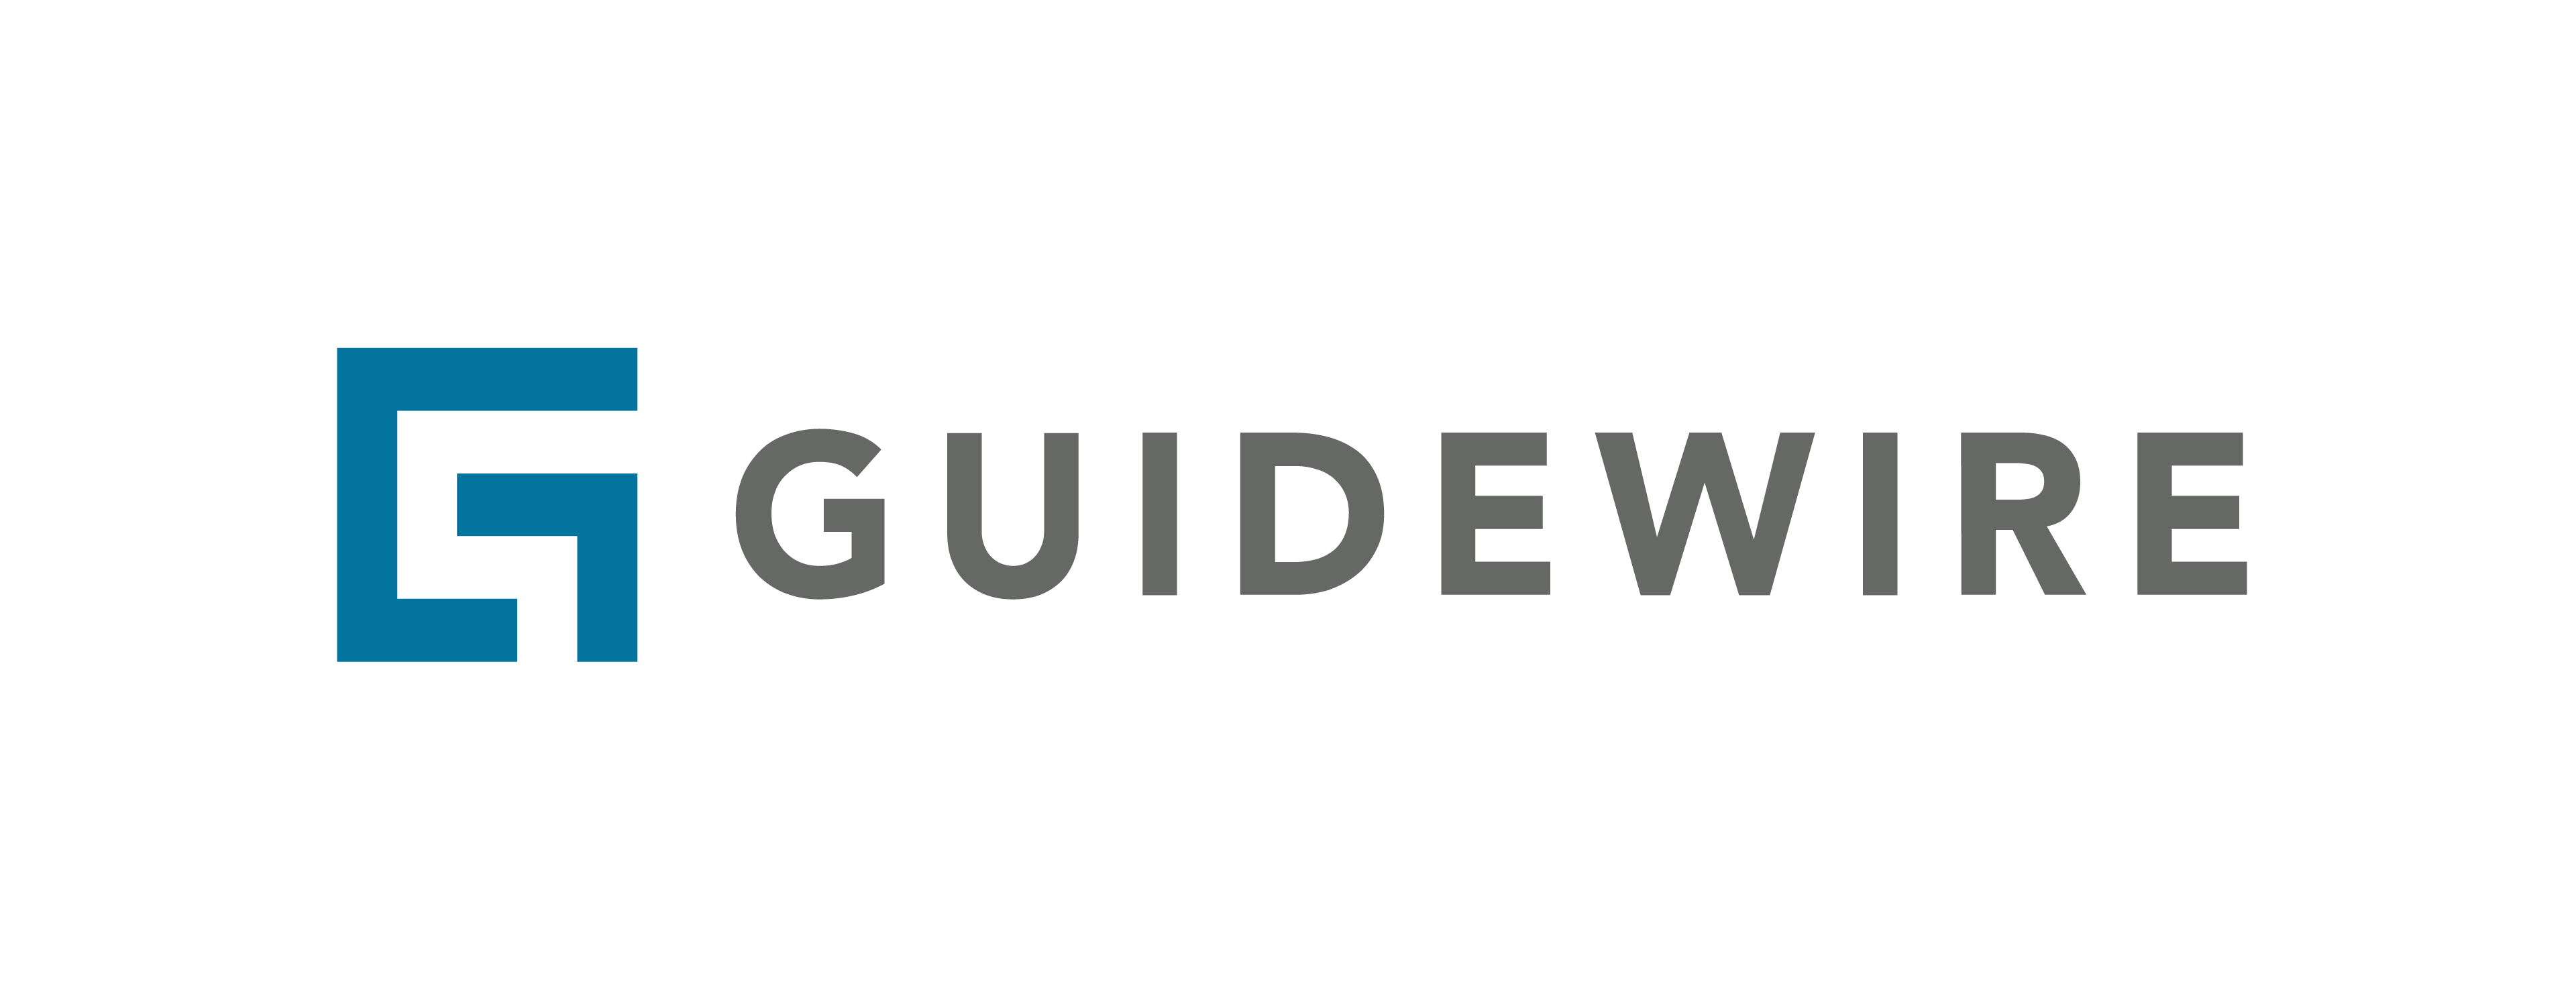 Logotipo de Guidewire